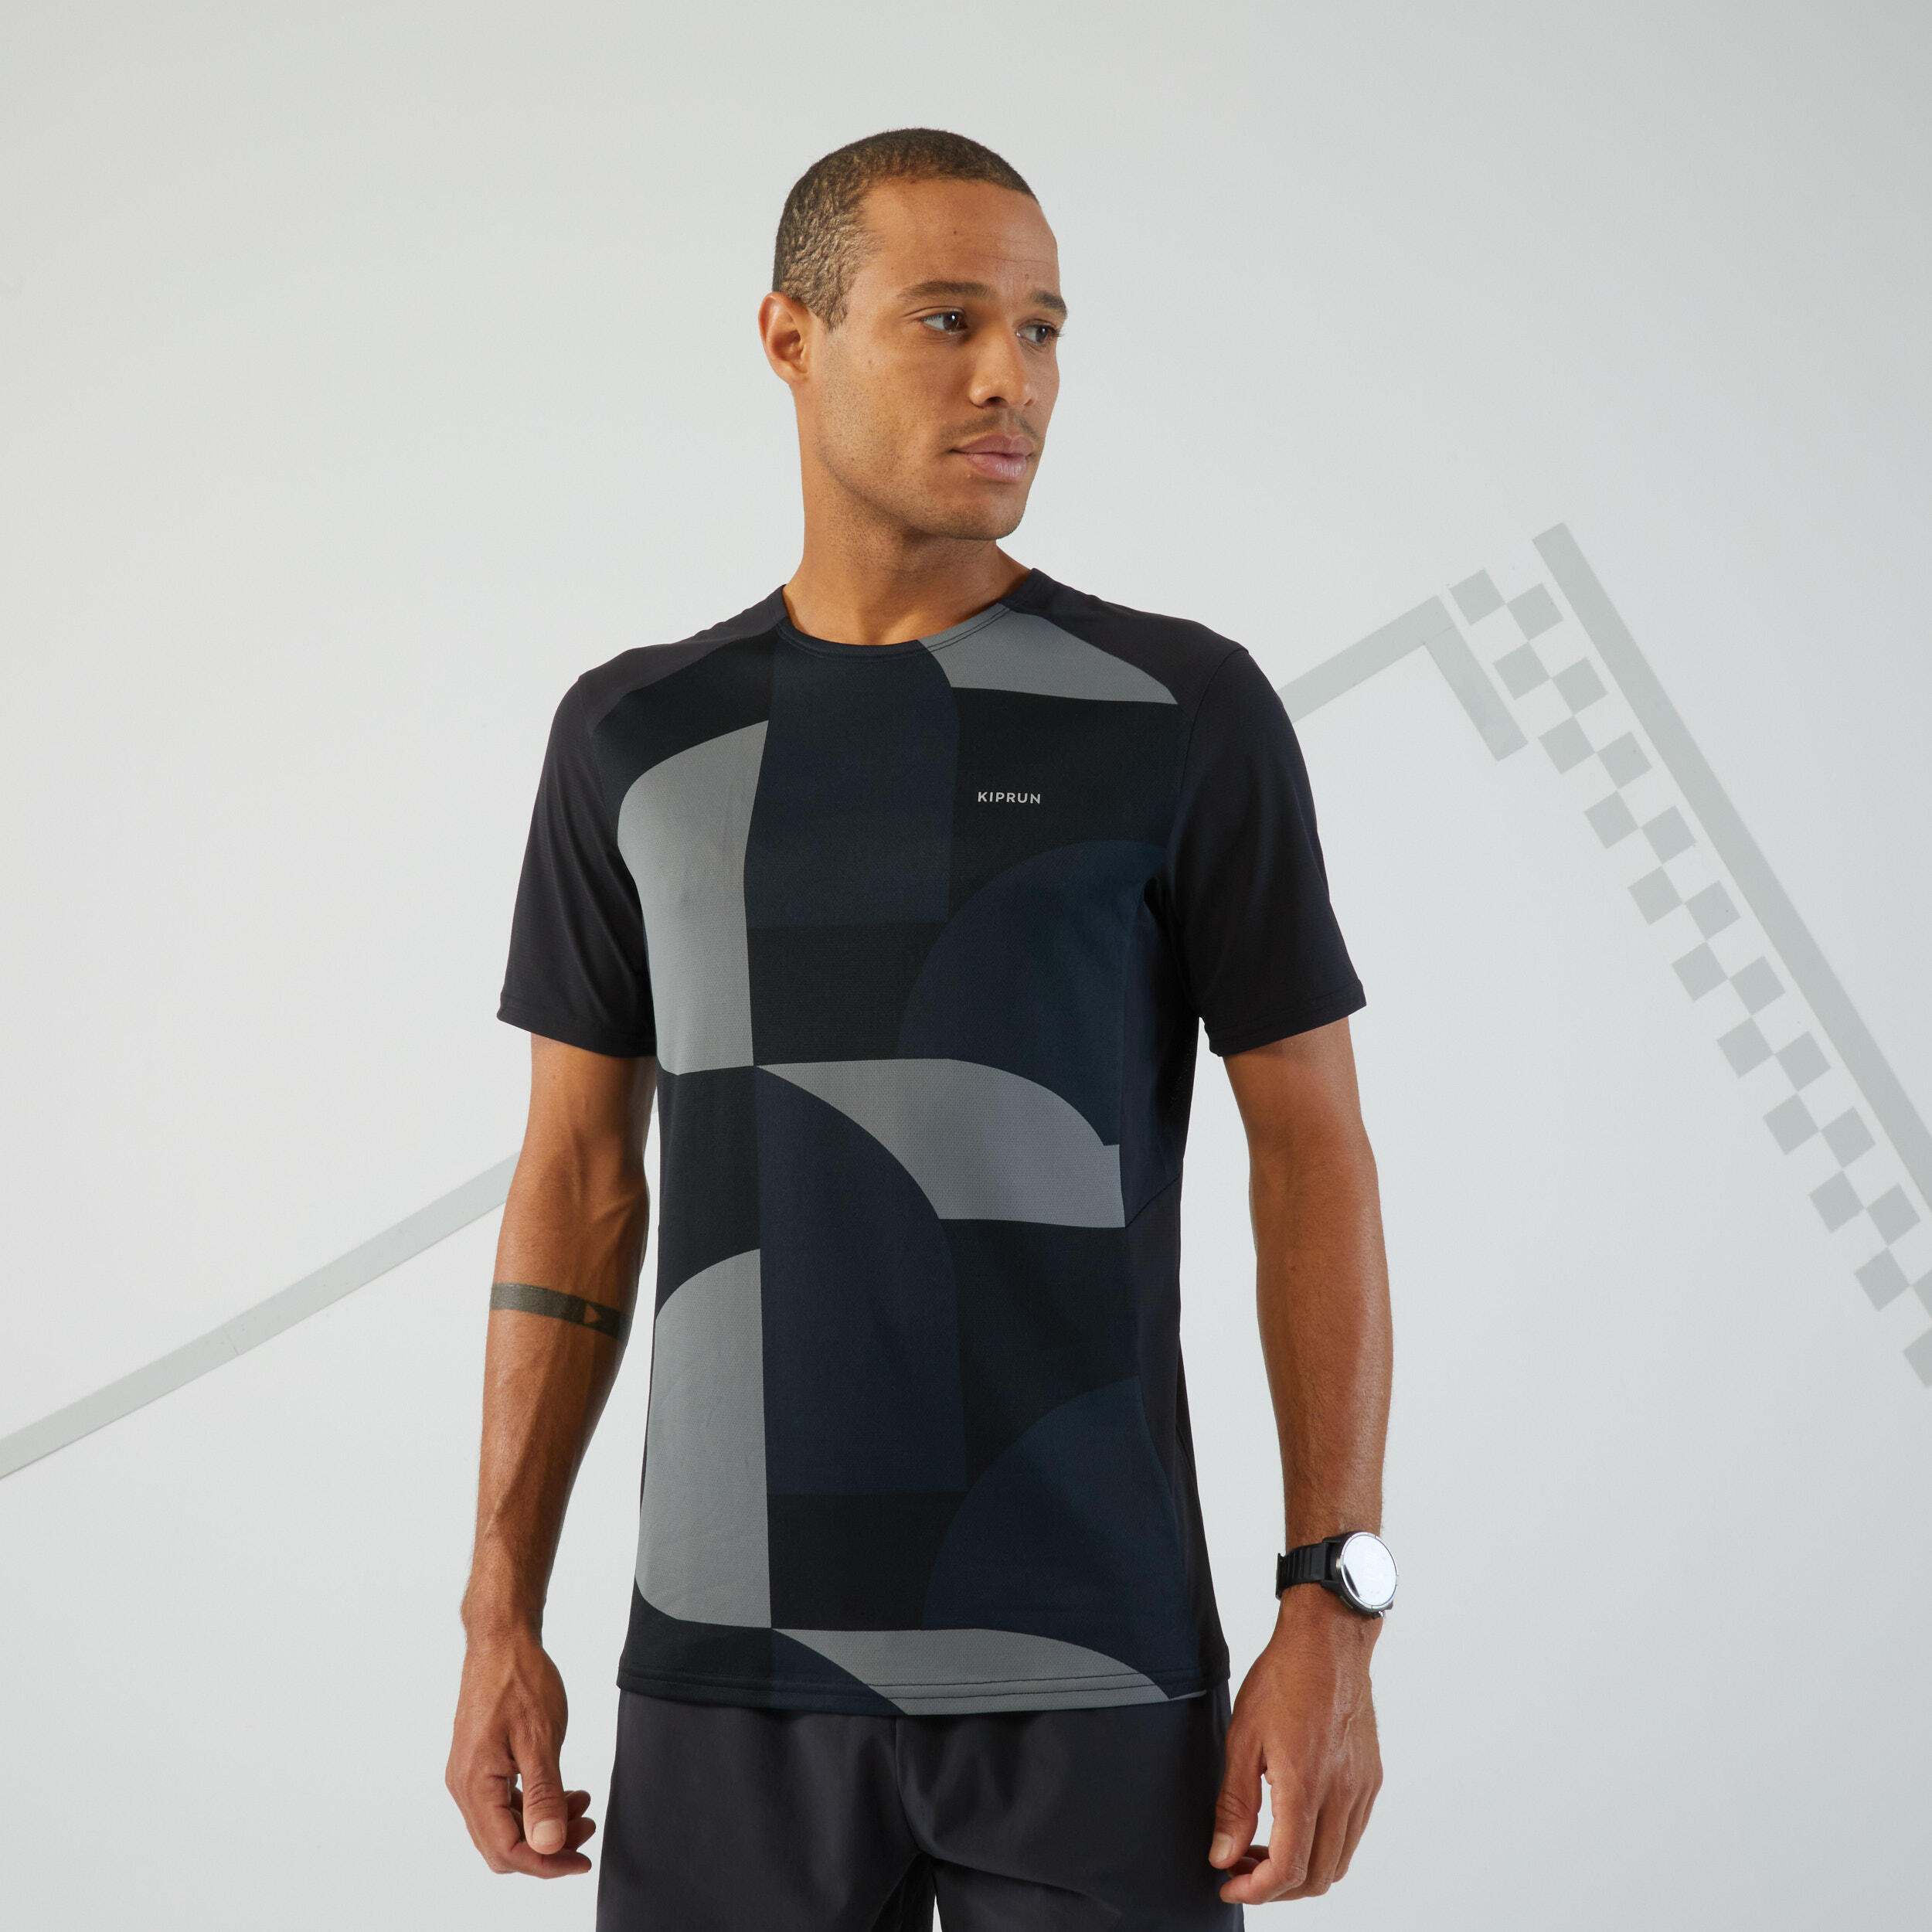 KIPRUN 900 Light Men's Breathable Running T-shirt - Black/Carbon grey 1/6